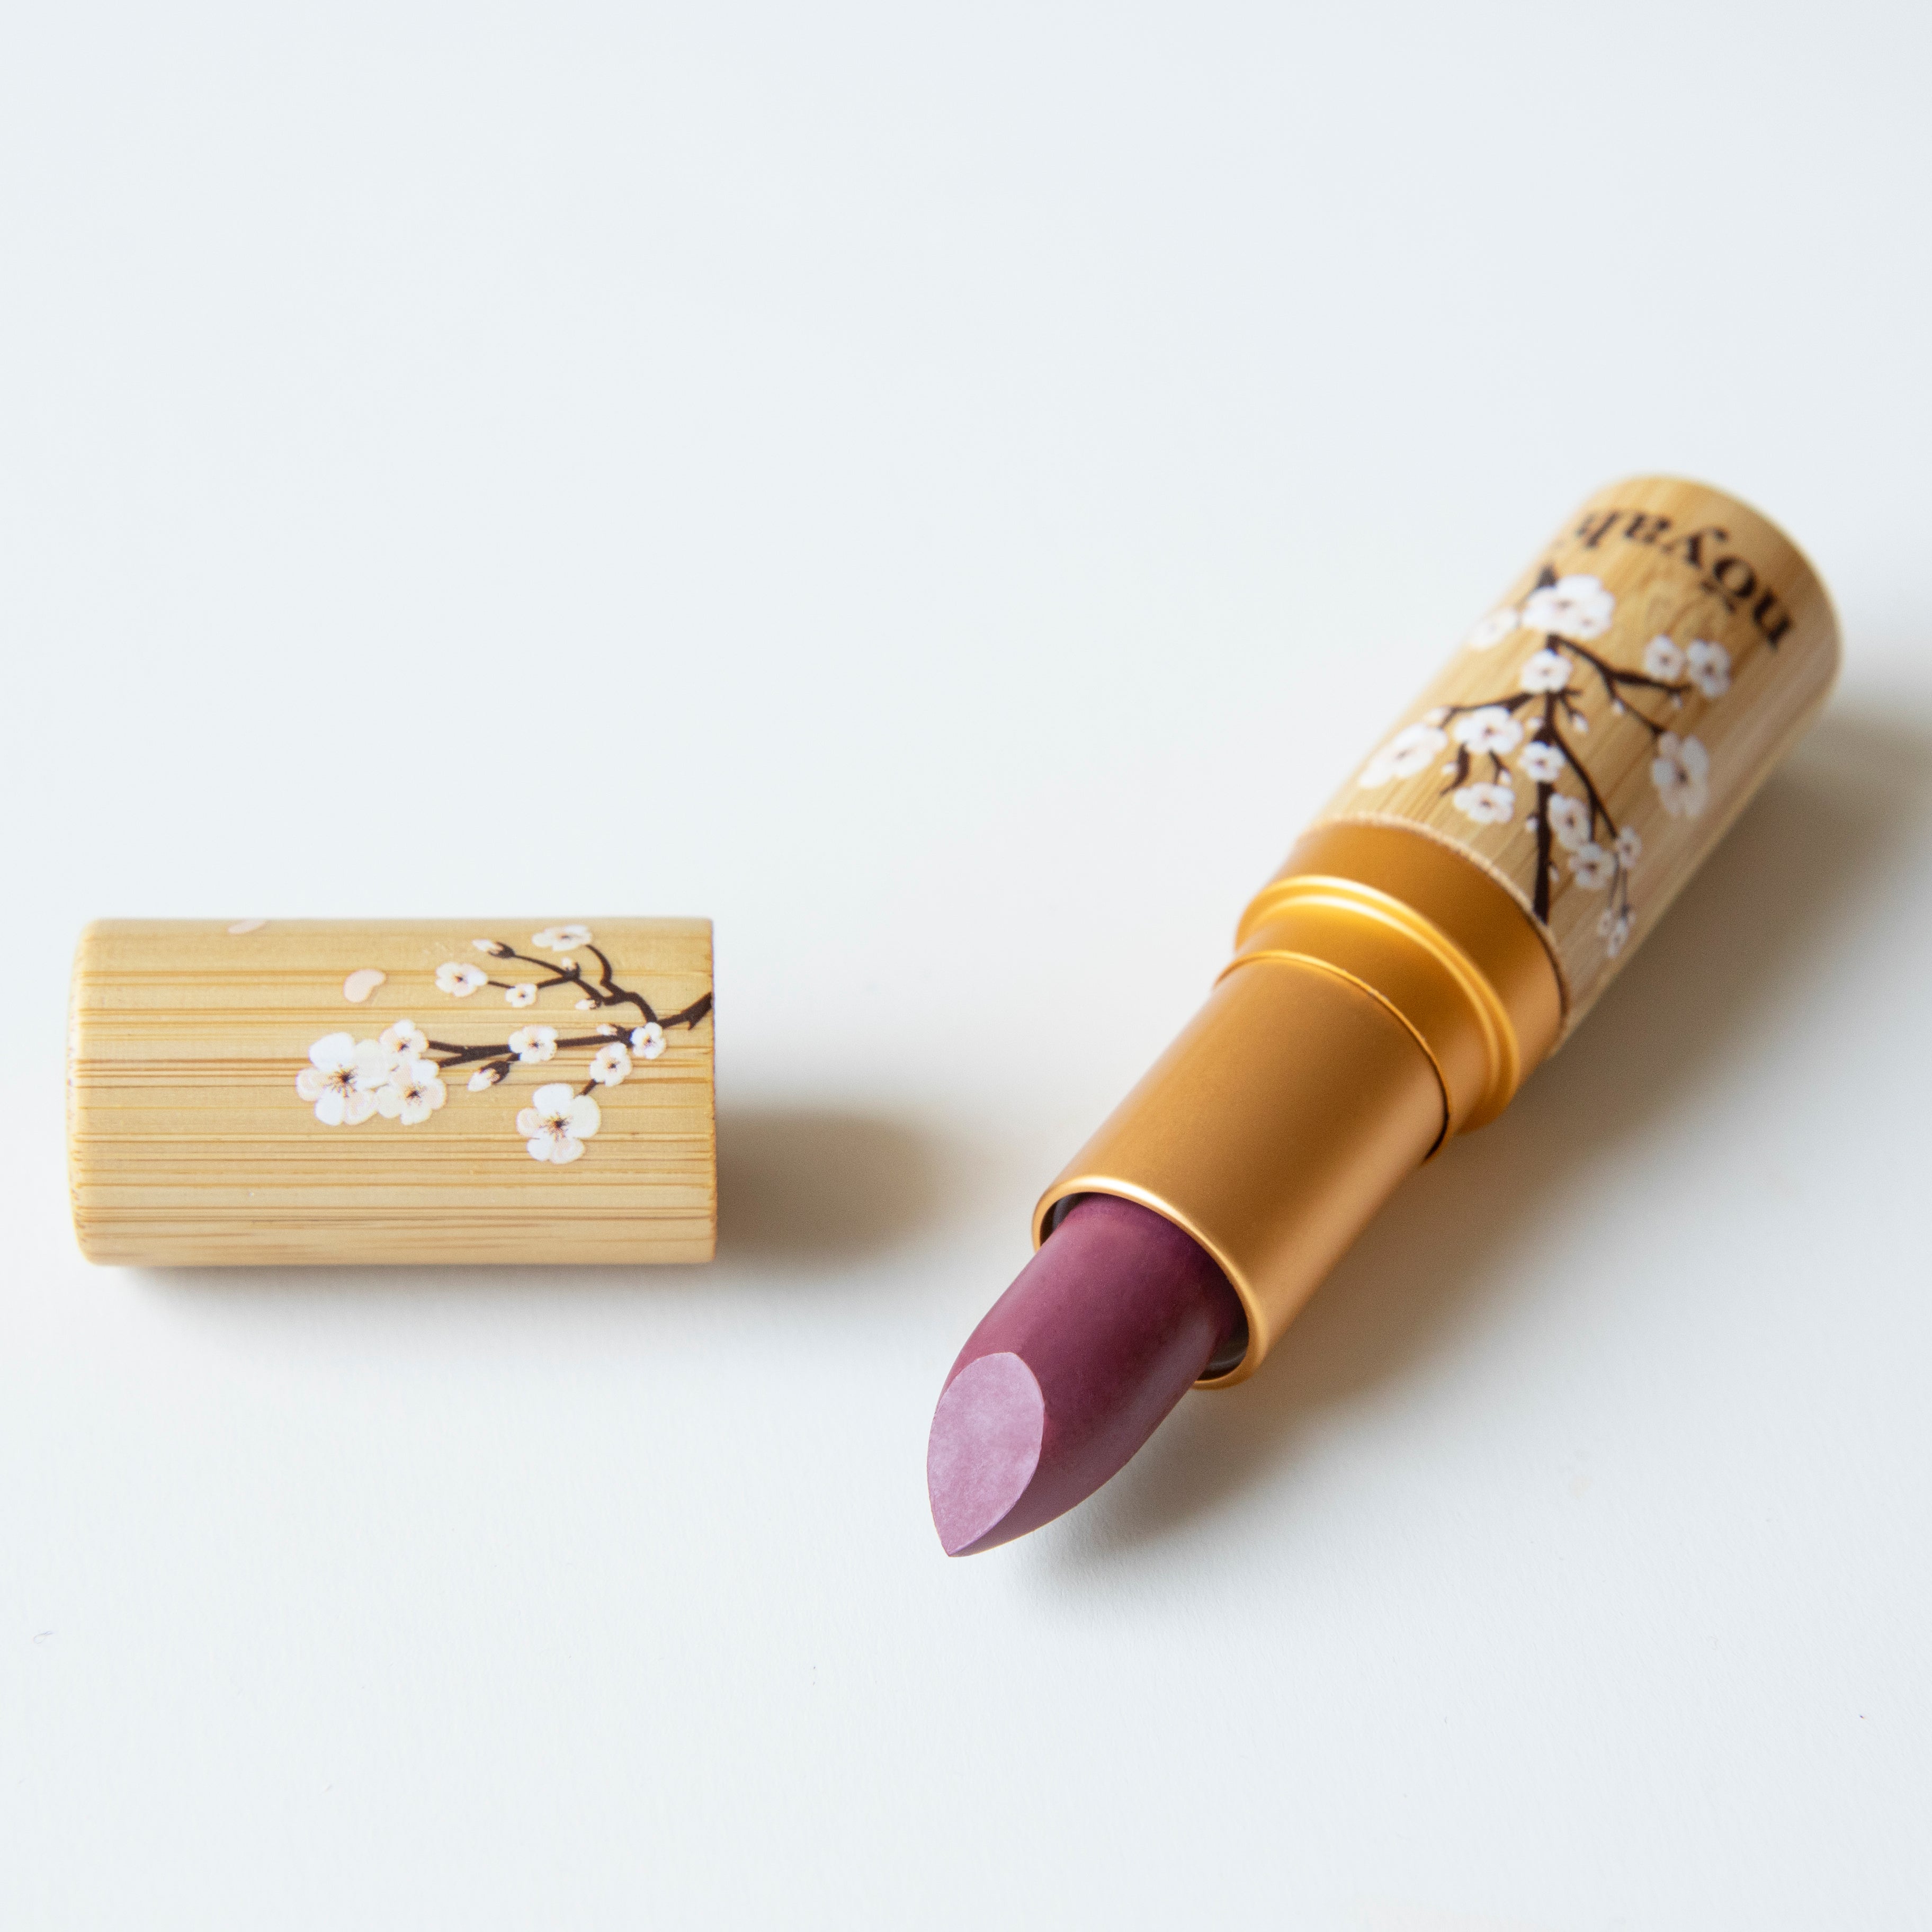 Noyah Lipstick (Deeply in Mauve) 唇天然唇膏 (醬果莓紫) 4.5g